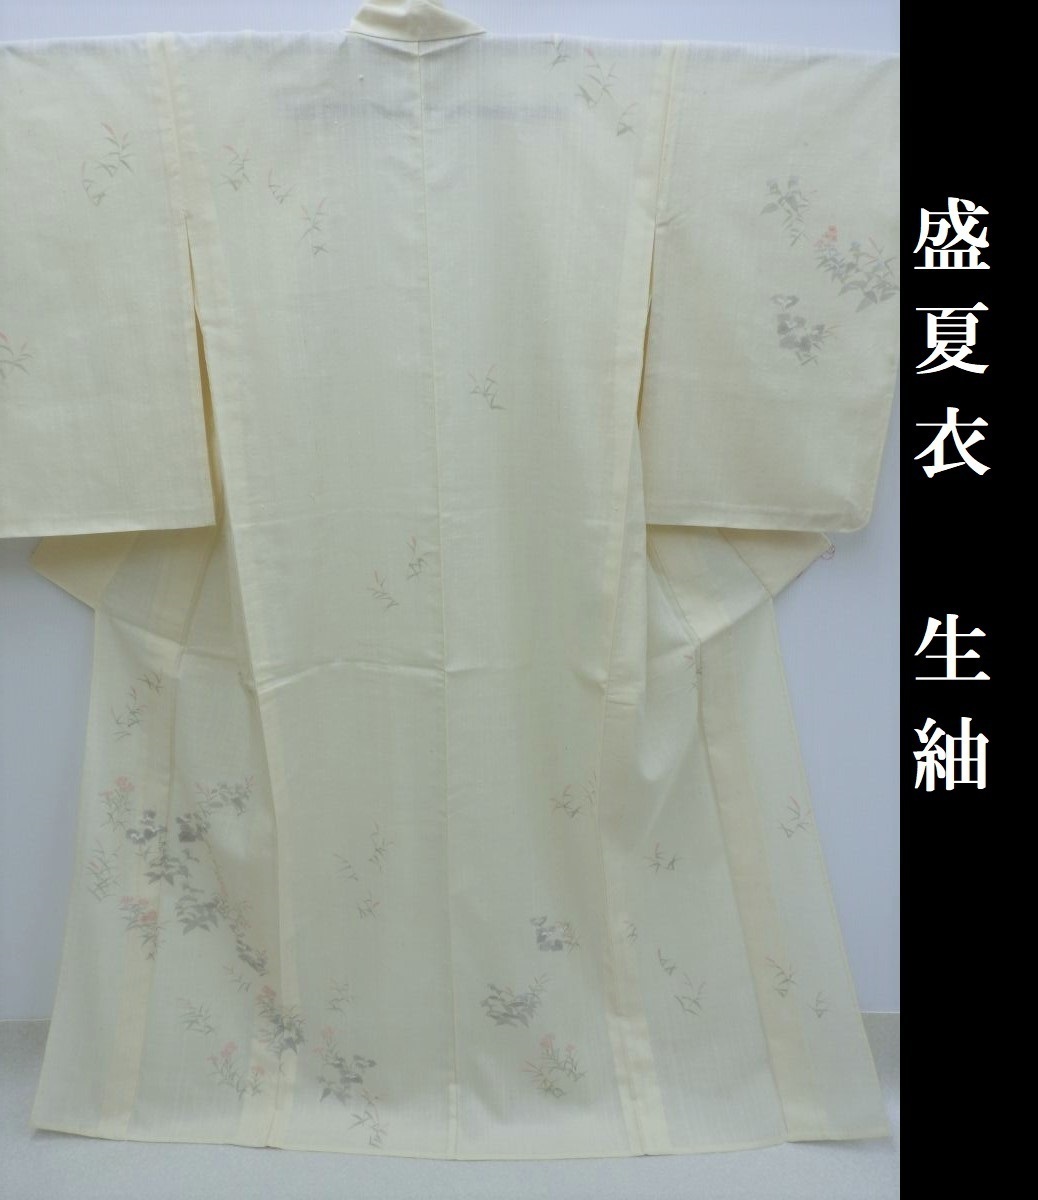 Club Fuji★Kimono de visite d'été, Tsumugi cru, teint à la main, motif floral, prêt à l'emploi (3156)*, Kimono femme, kimono, Robe de visite, Prêt à l'emploi